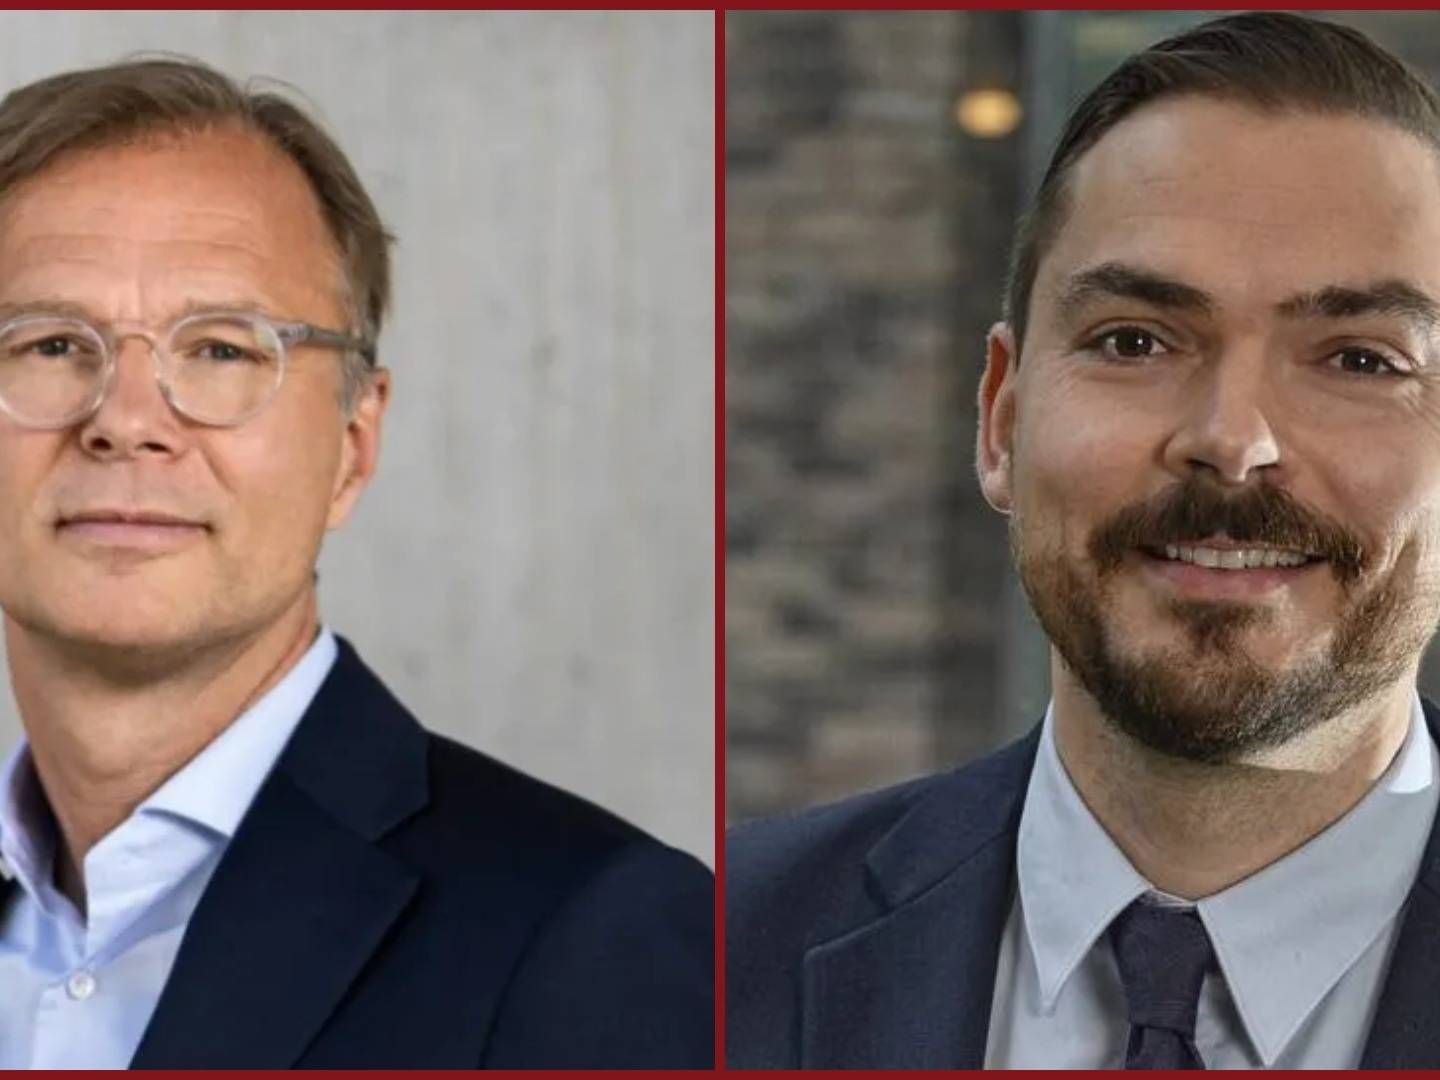 Kåre Hahn Michelsen, CIO at pension fund P+, and Thomas Otbo, CIO at Danske Bank Asset Management. | Photo: PR